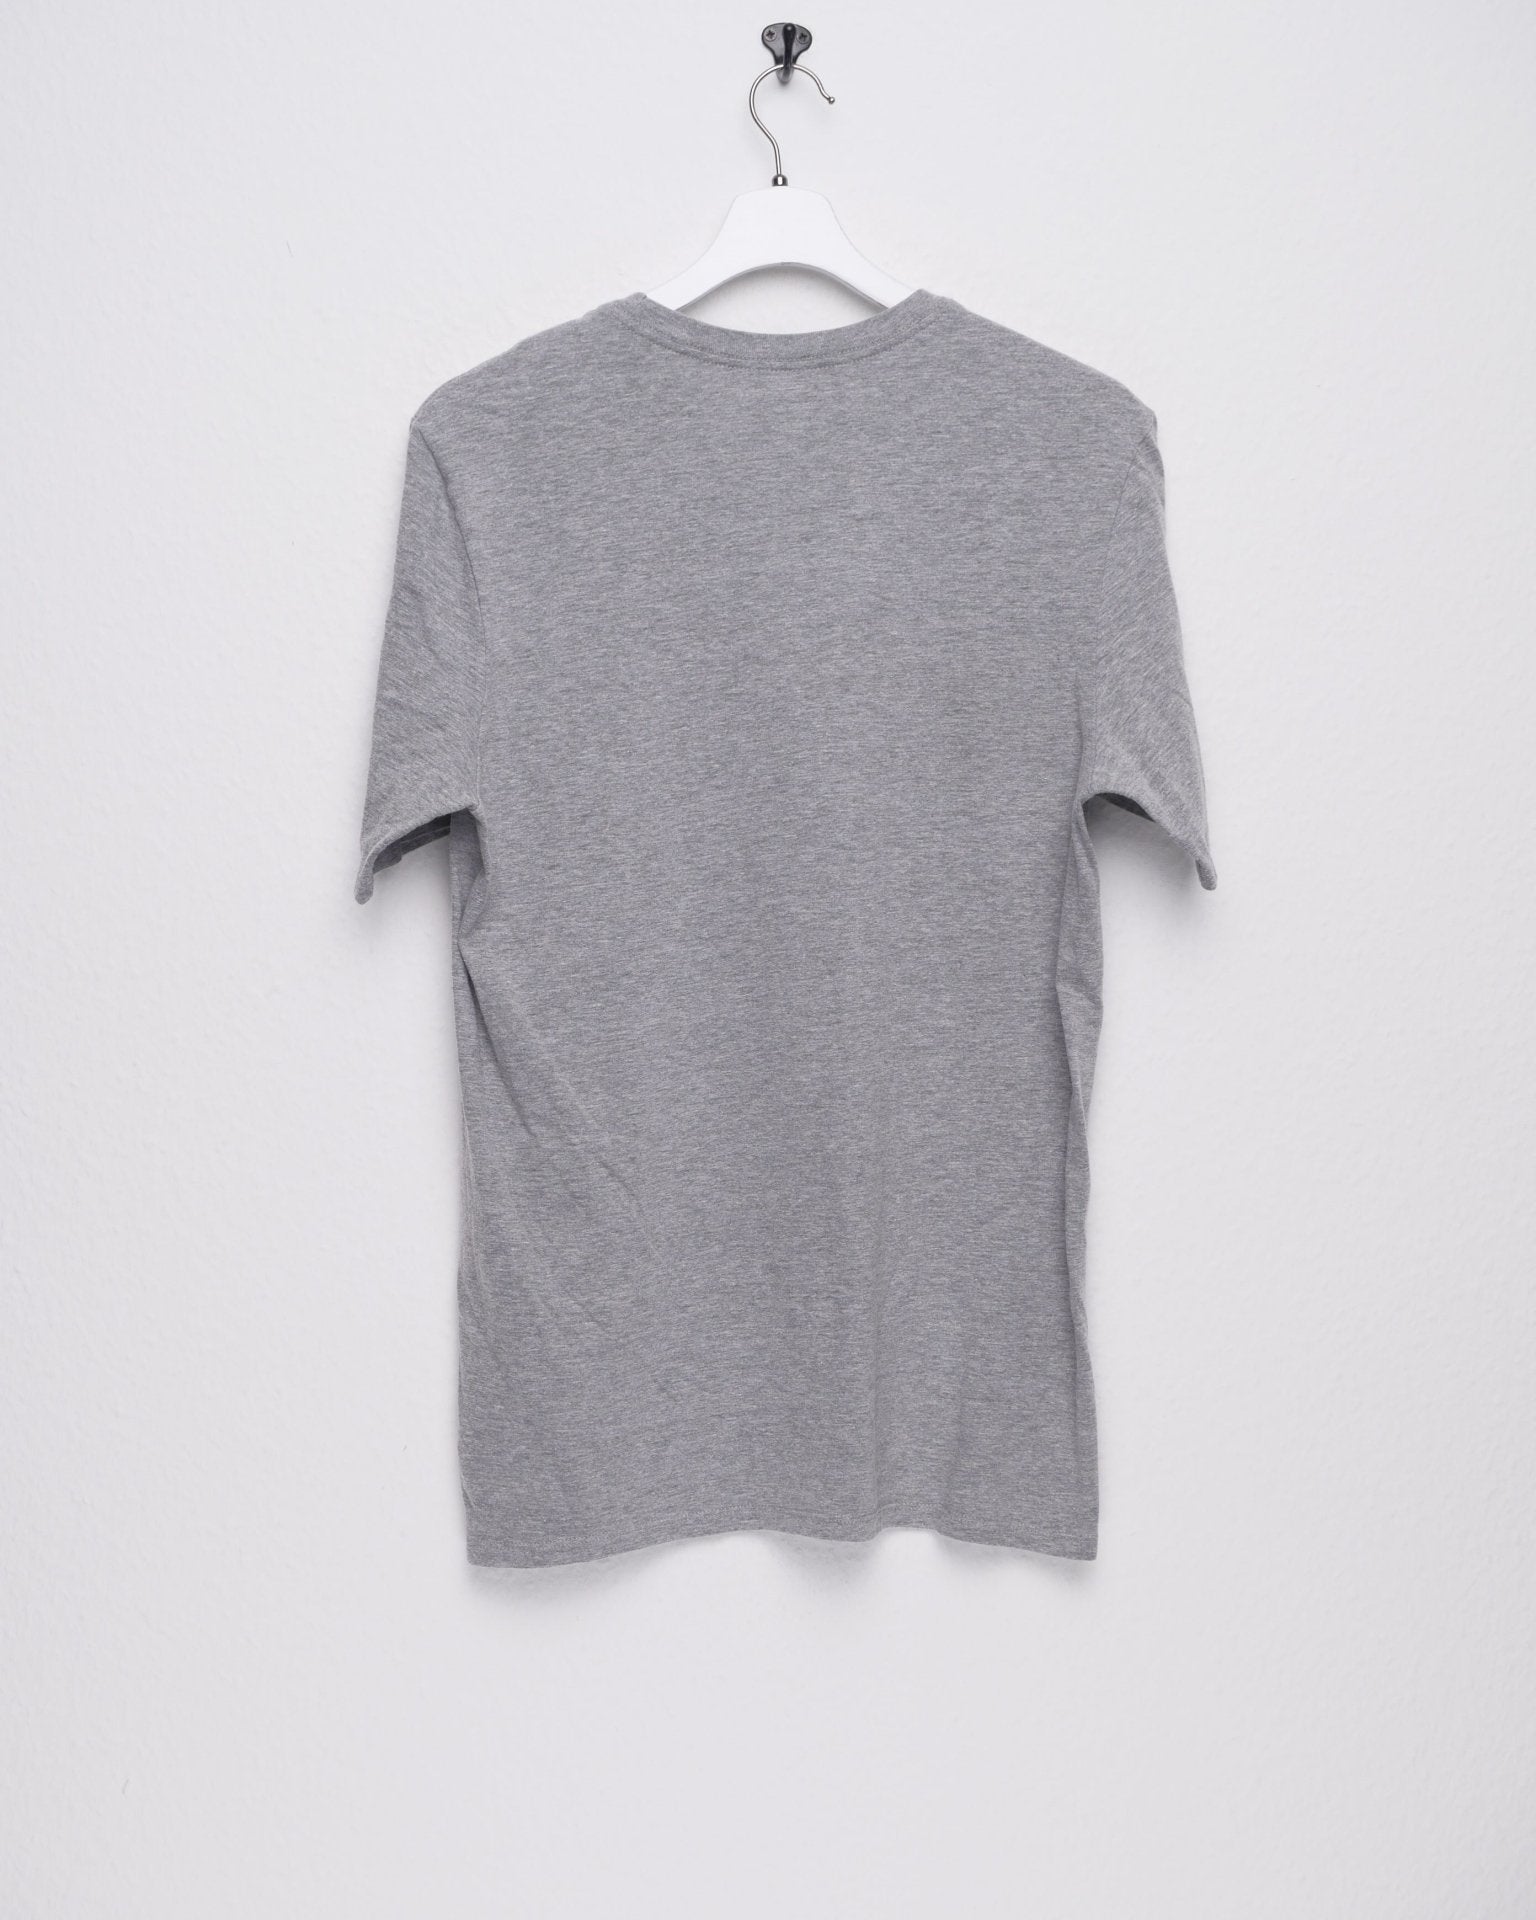 nike printed Big Swoosh grey Shirt - Peeces